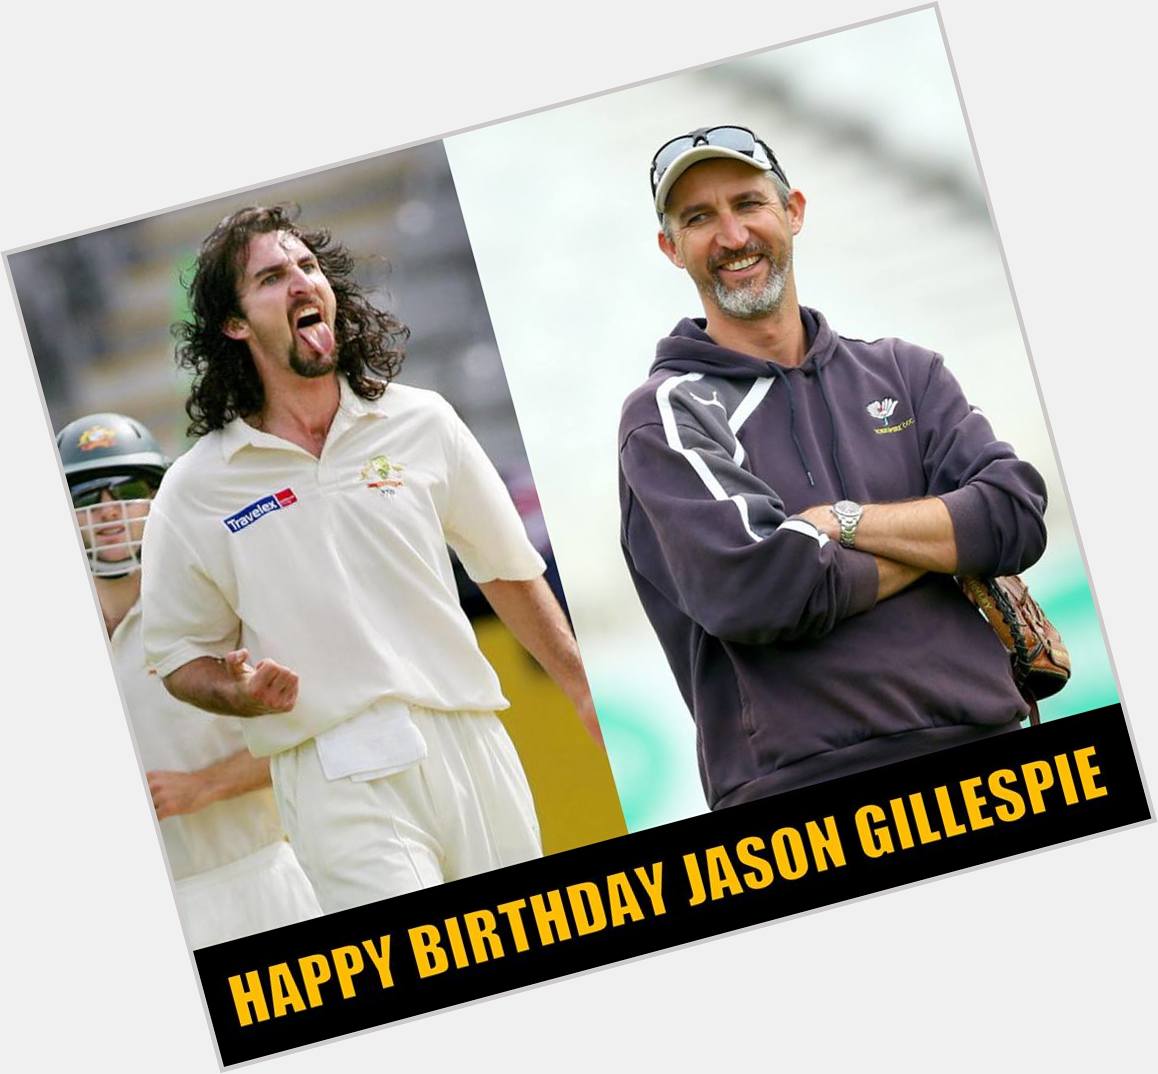 Happy birthday, Jason Gillespie! The former Australian Cricket Team fast bowler turns 40 today. 